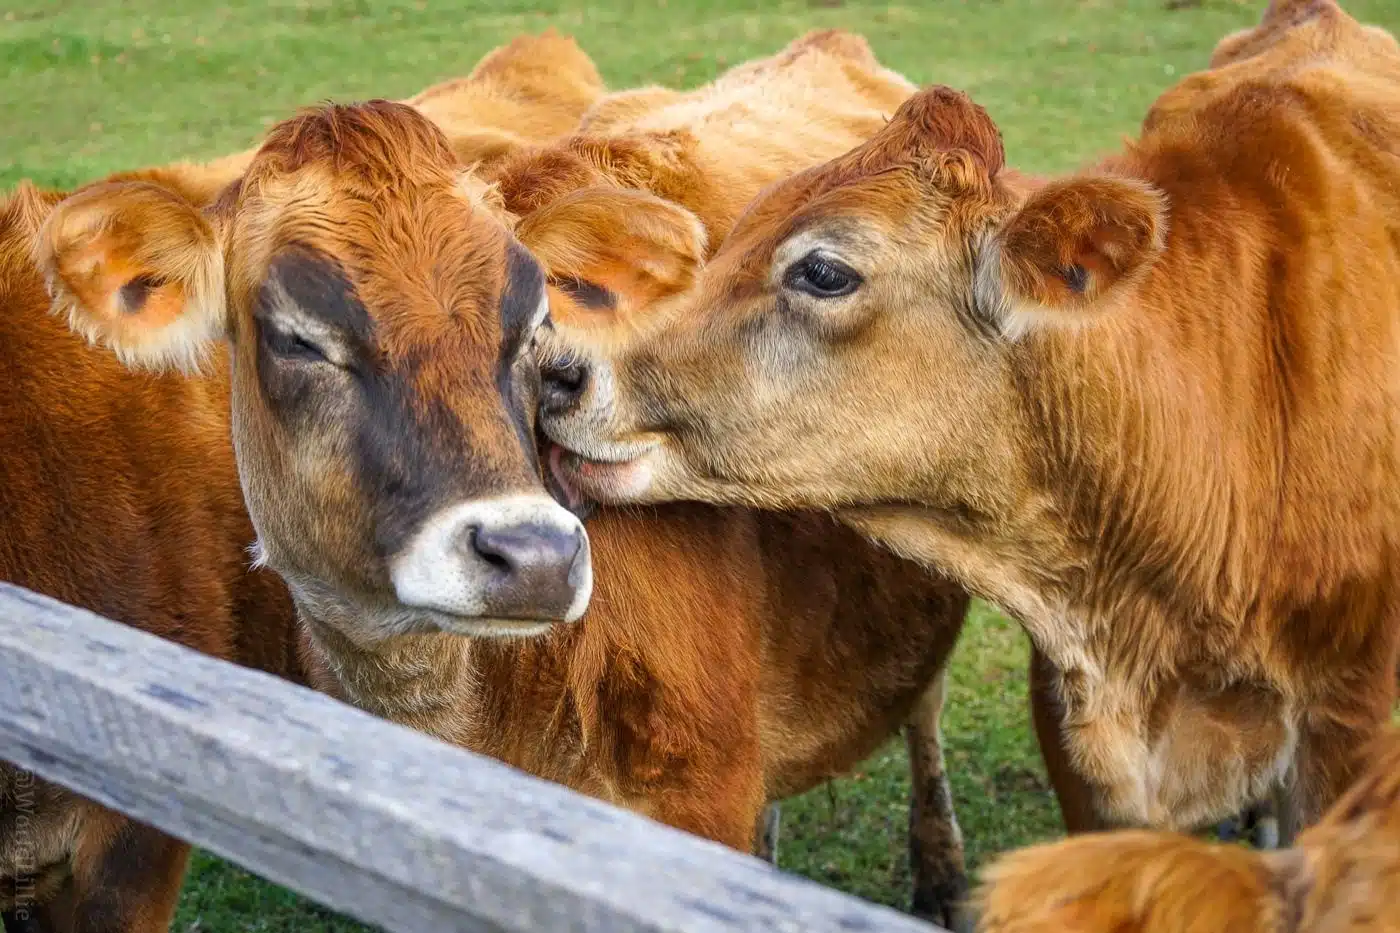 Kissing cows at Billings Farm, Woodstock, Vermont.